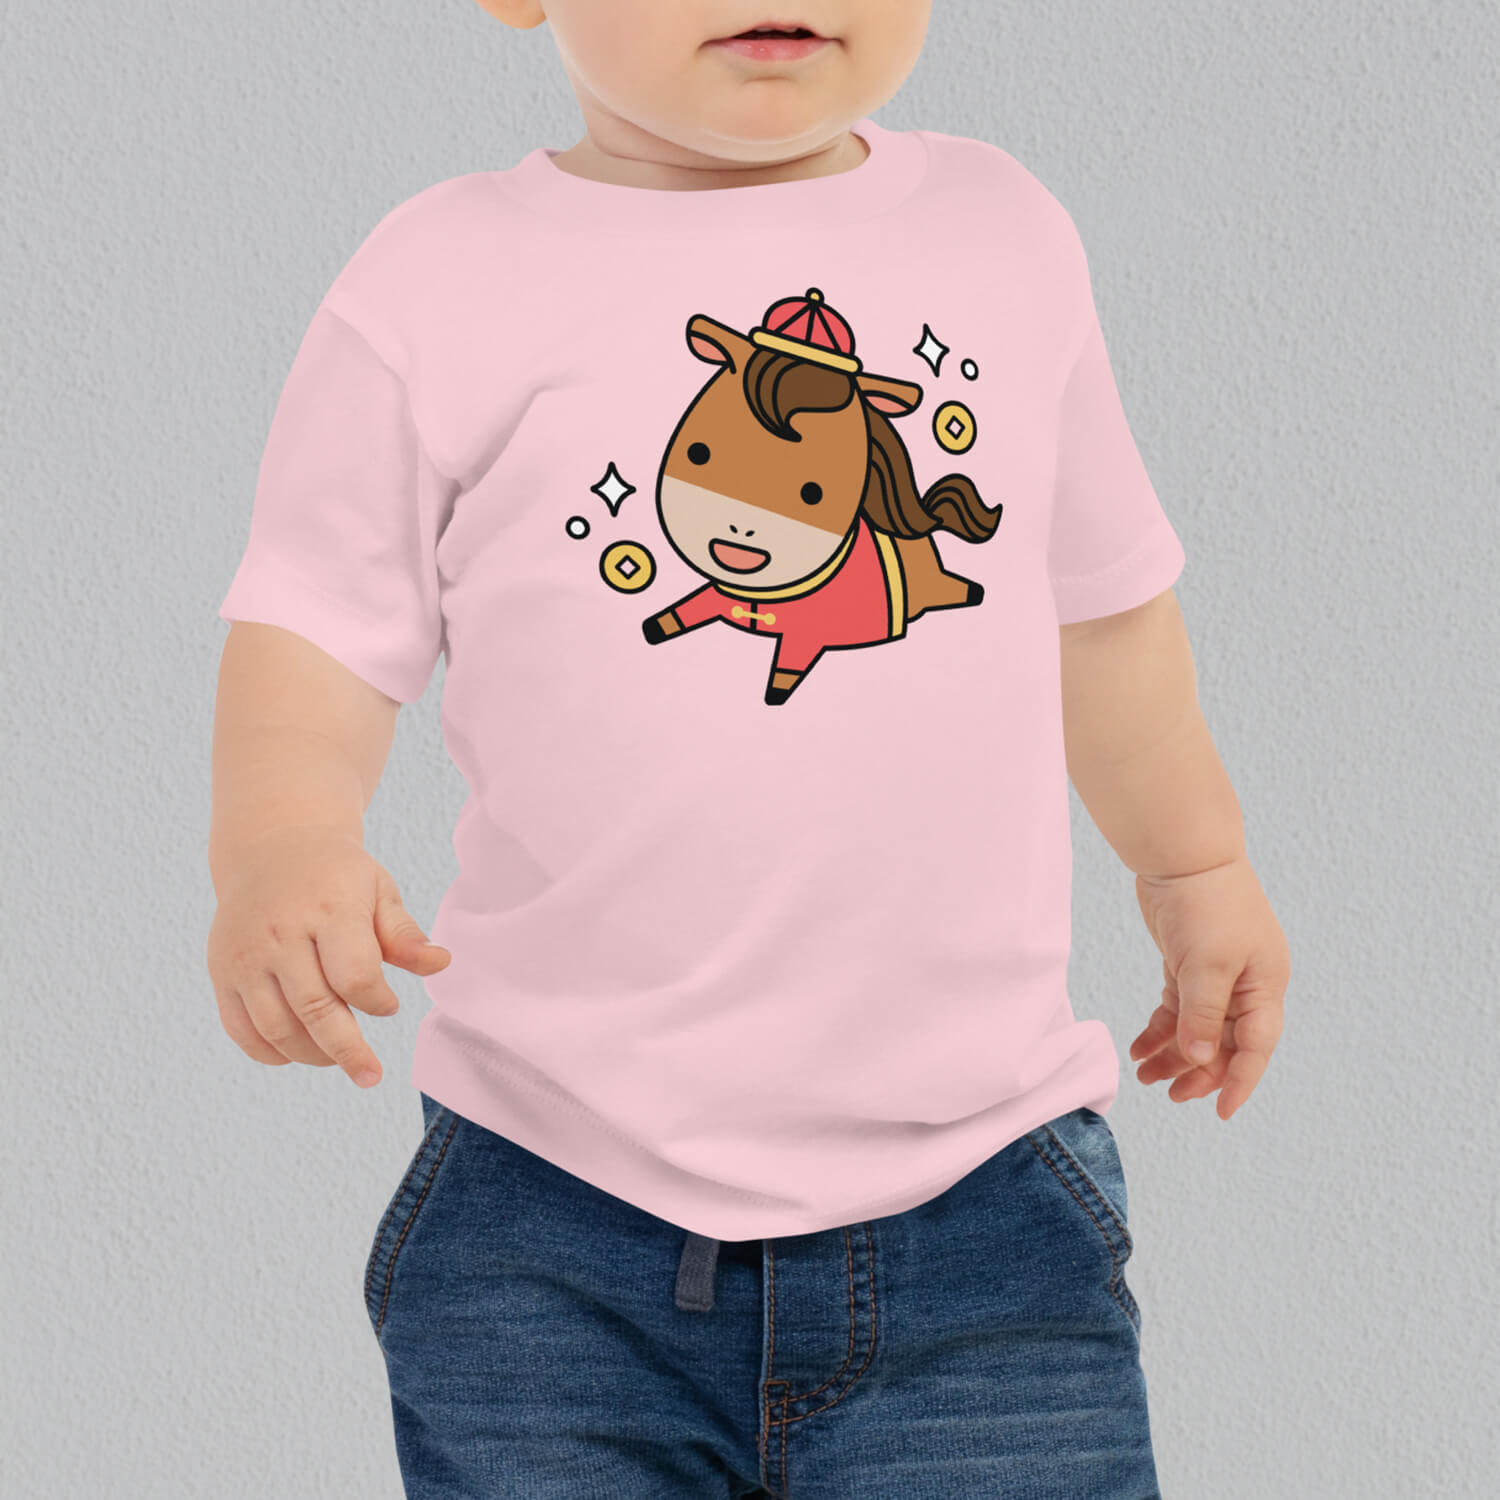 Year of the Horse Baby T-Shirt - Ni De Mama Chinese Clothing